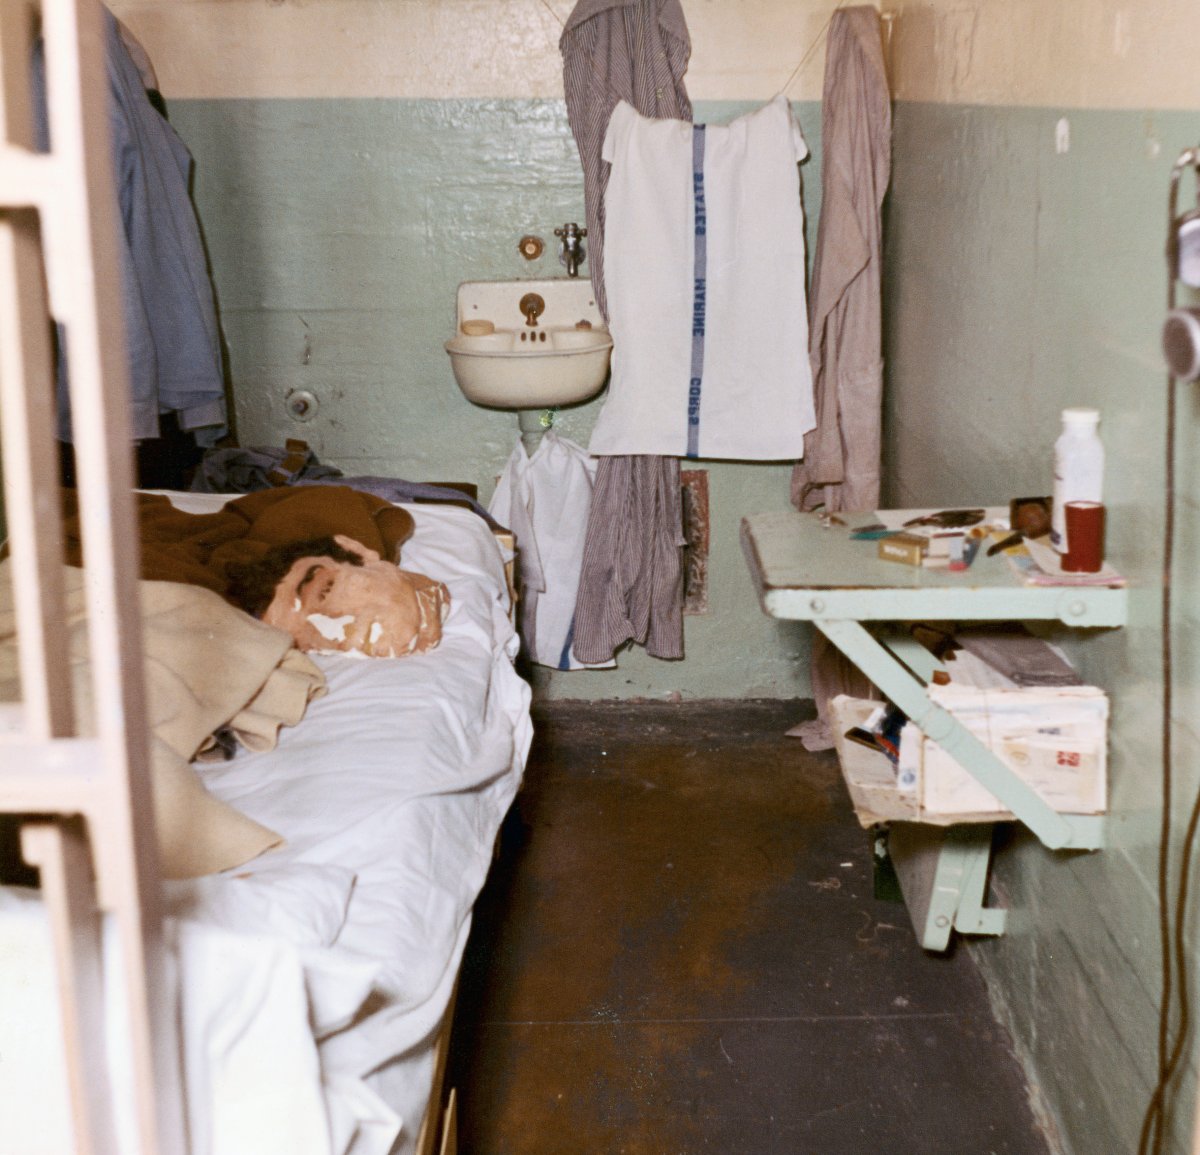 U.S. Marshals still looking for inmates who escaped Alcatraz 60 years